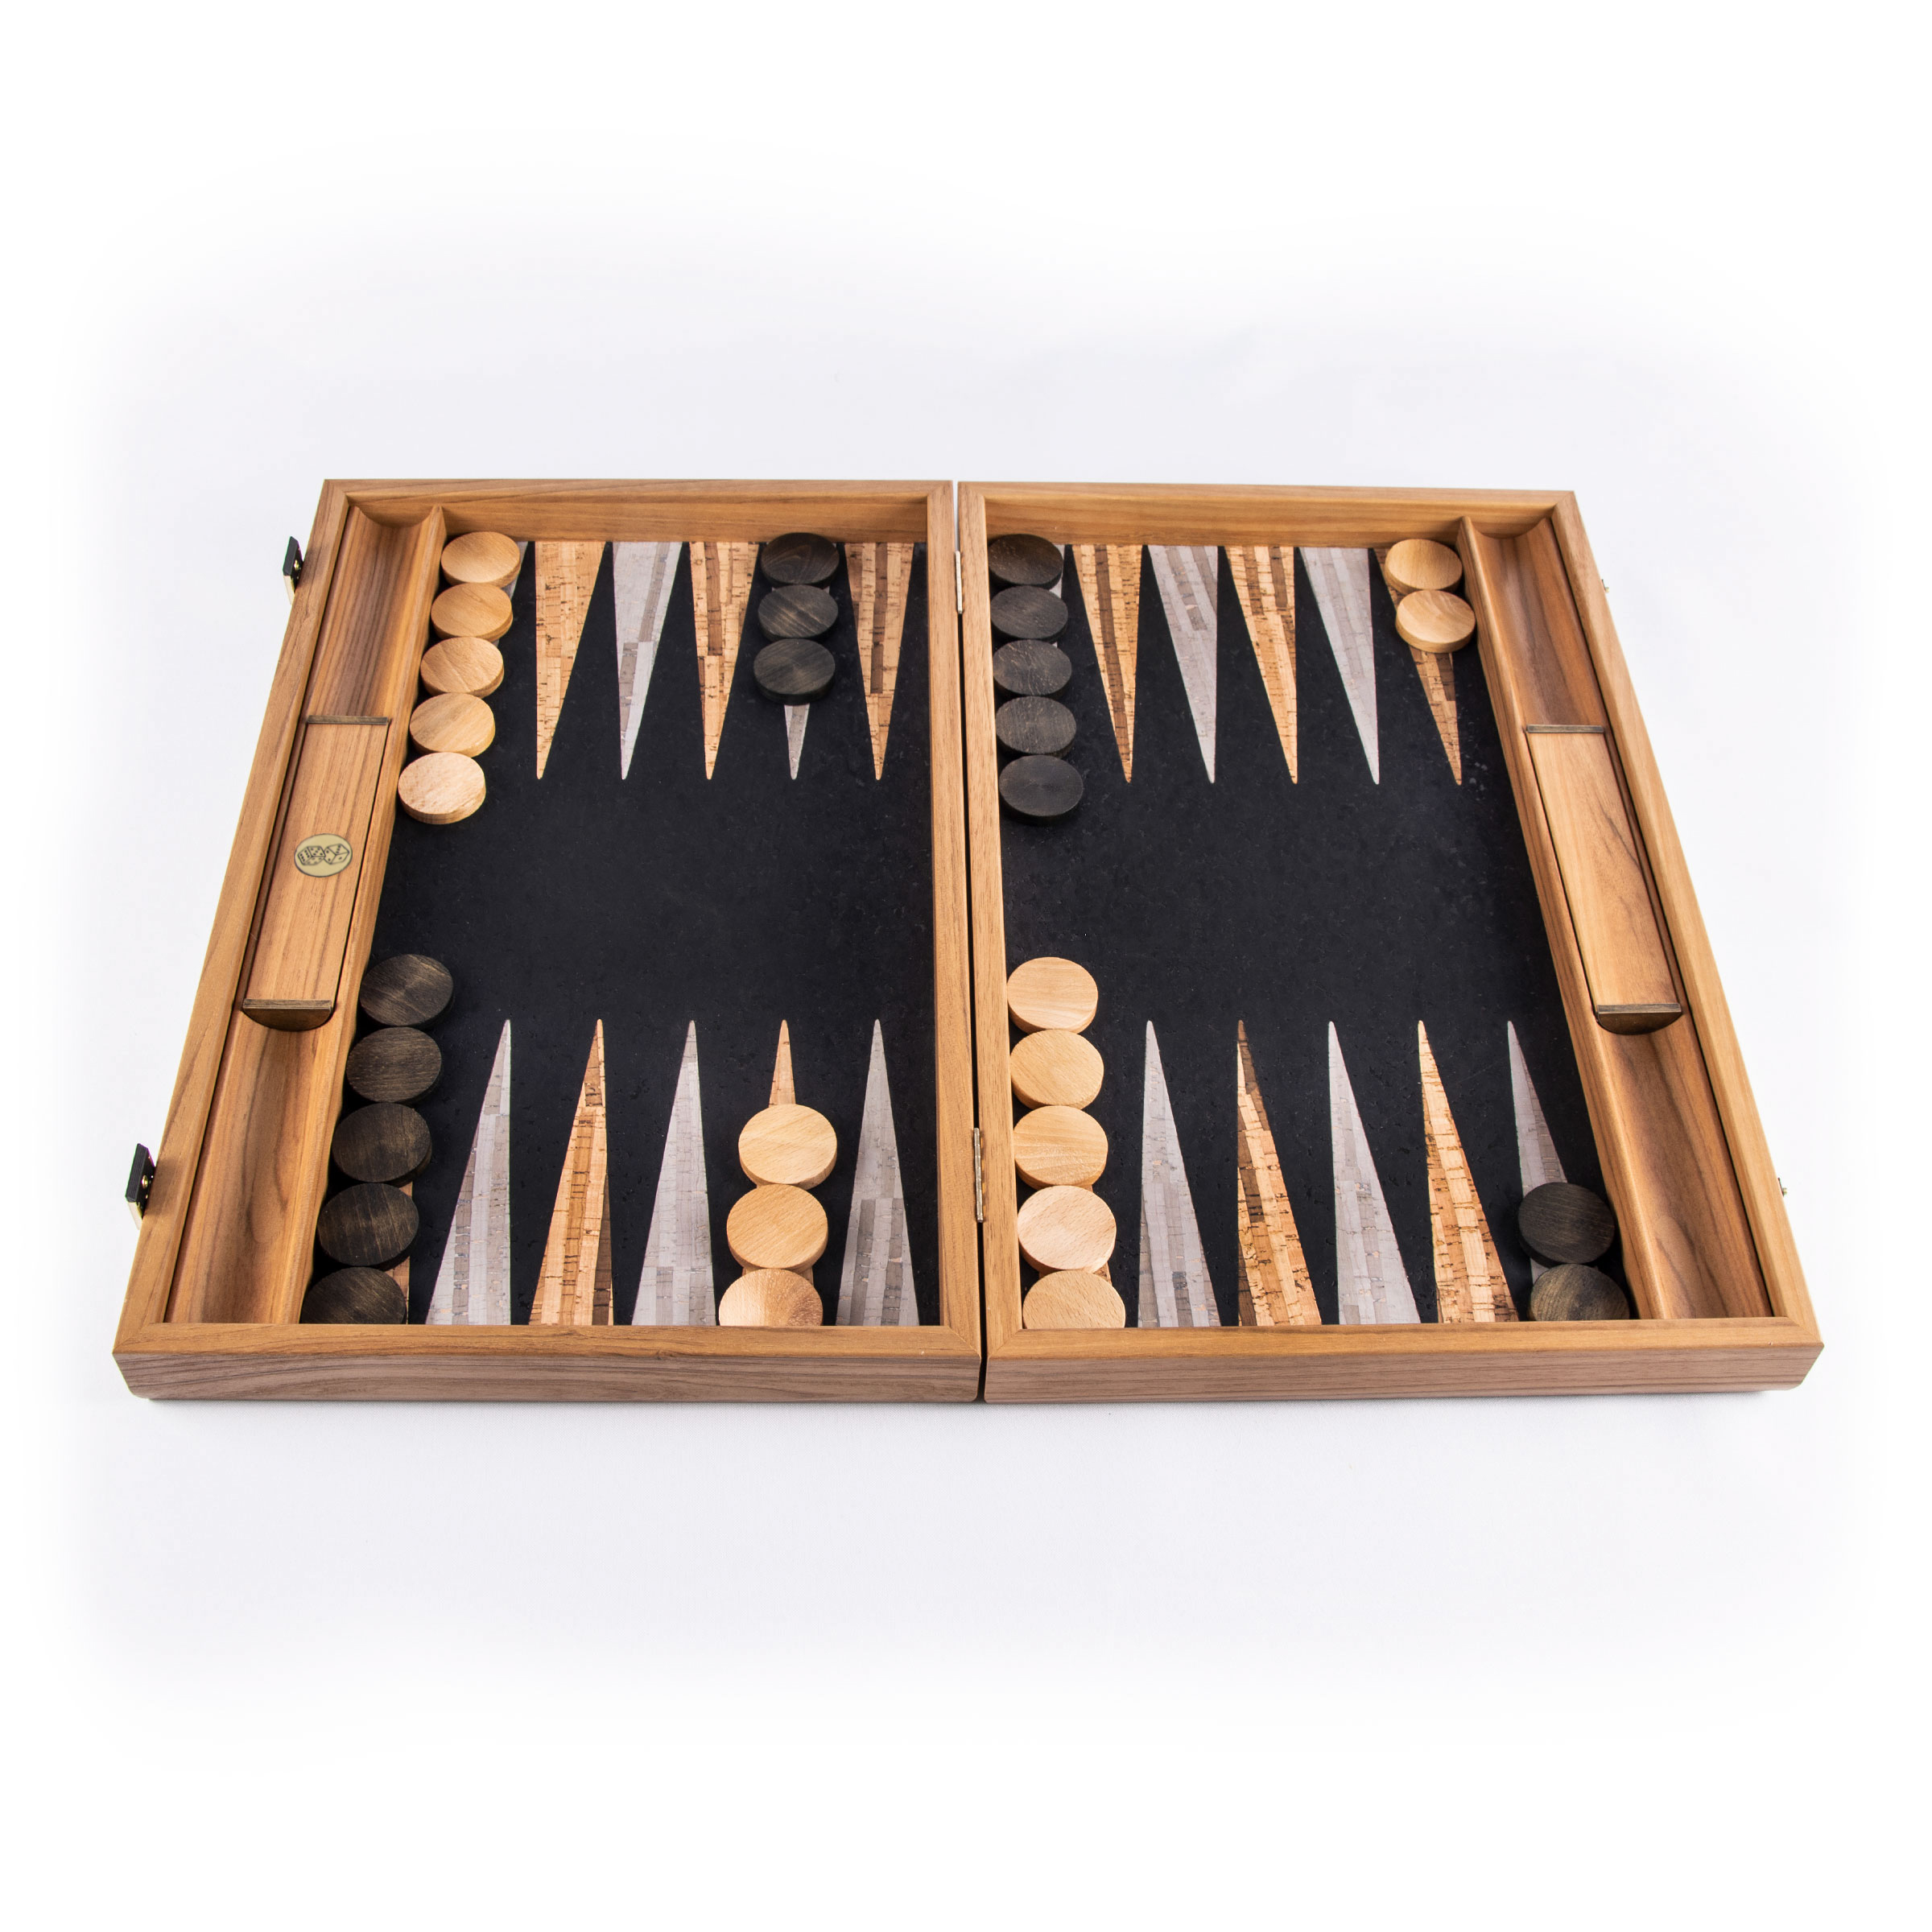 Mahogany with Printed Field and Side Racks 19-inch Wood Backgammon Set 